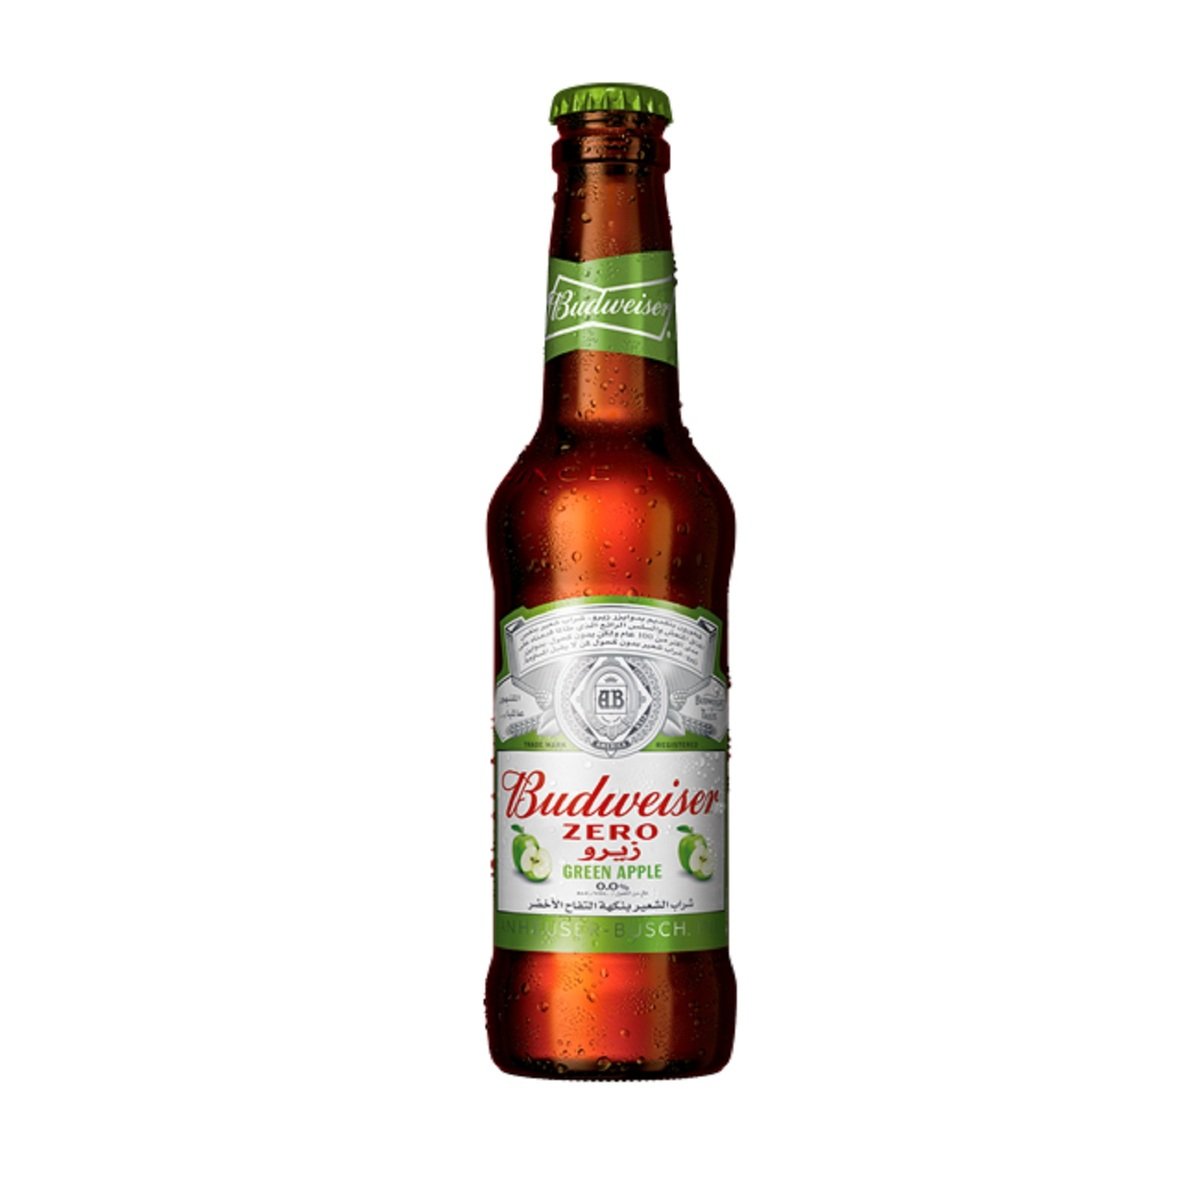 Buy Budweiser Zero Green Apple Bottle 6 x 330ml Online at Best Price | Non Alcoholic Beer | Lulu Kuwait in Kuwait